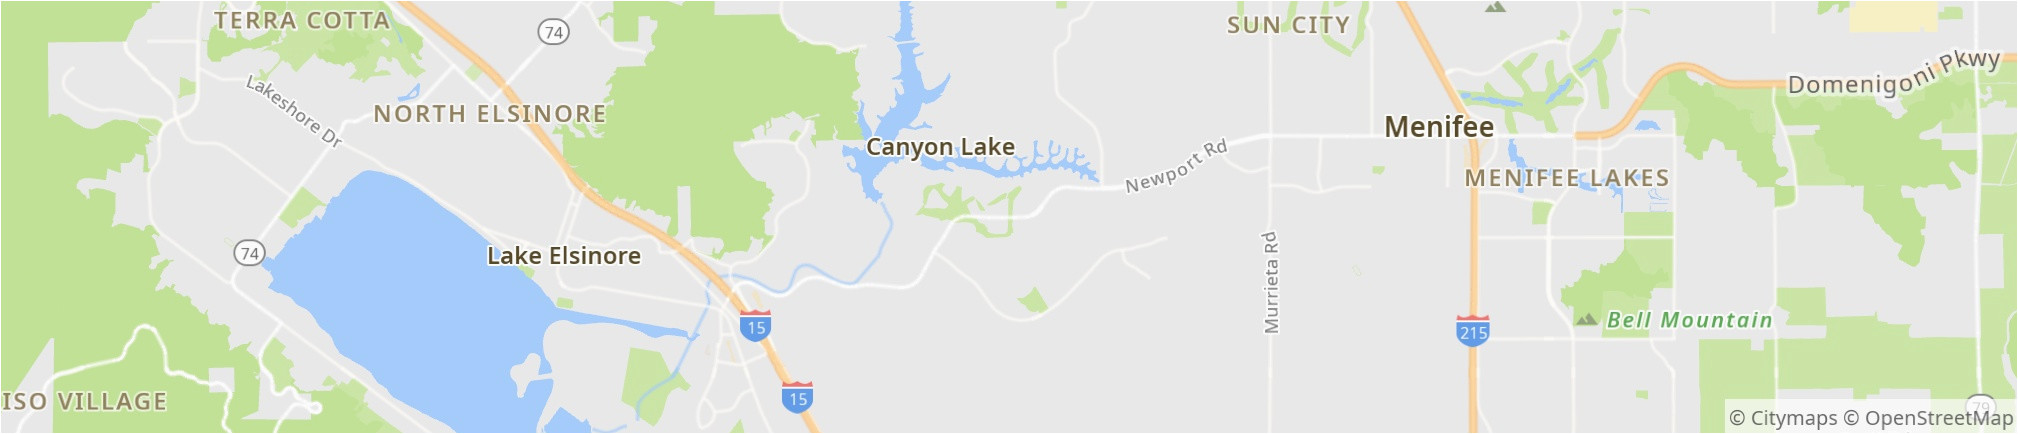 canyon lake 2019 best of canyon lake ca tourism tripadvisor